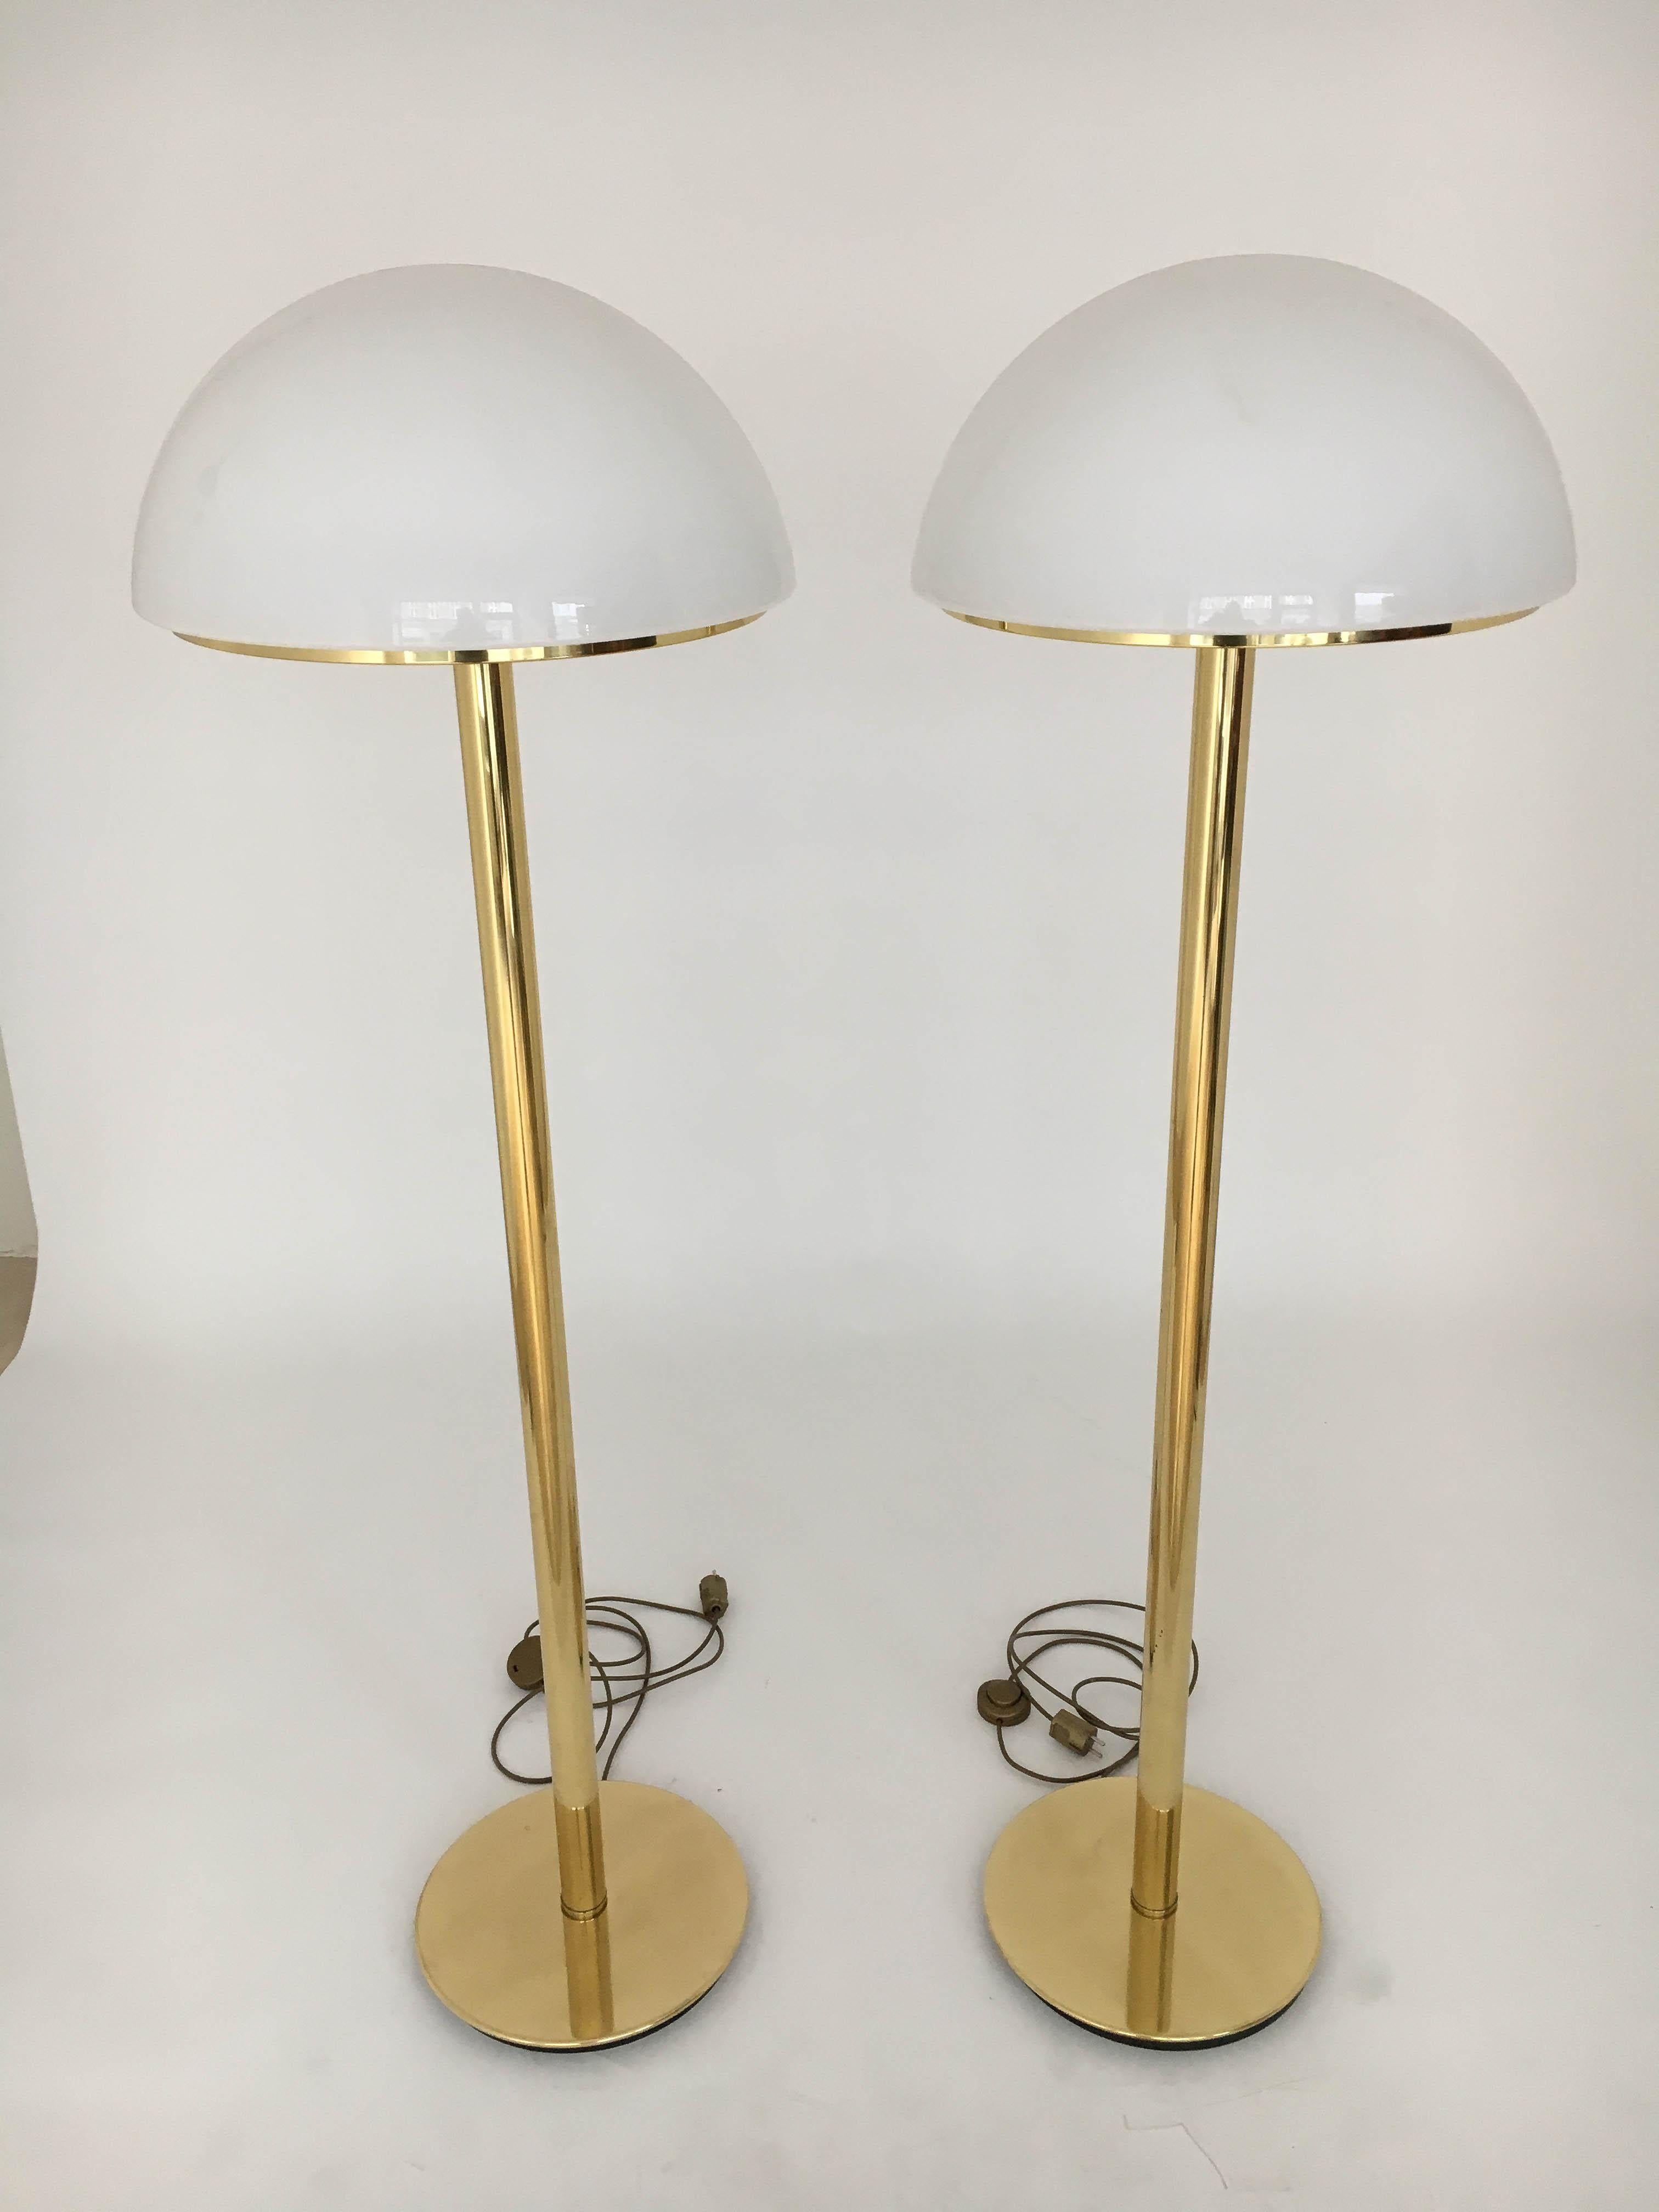 Glashütte Limburg Mushroom Floor Lamps Set of Two, Germany, 1970s For Sale 1